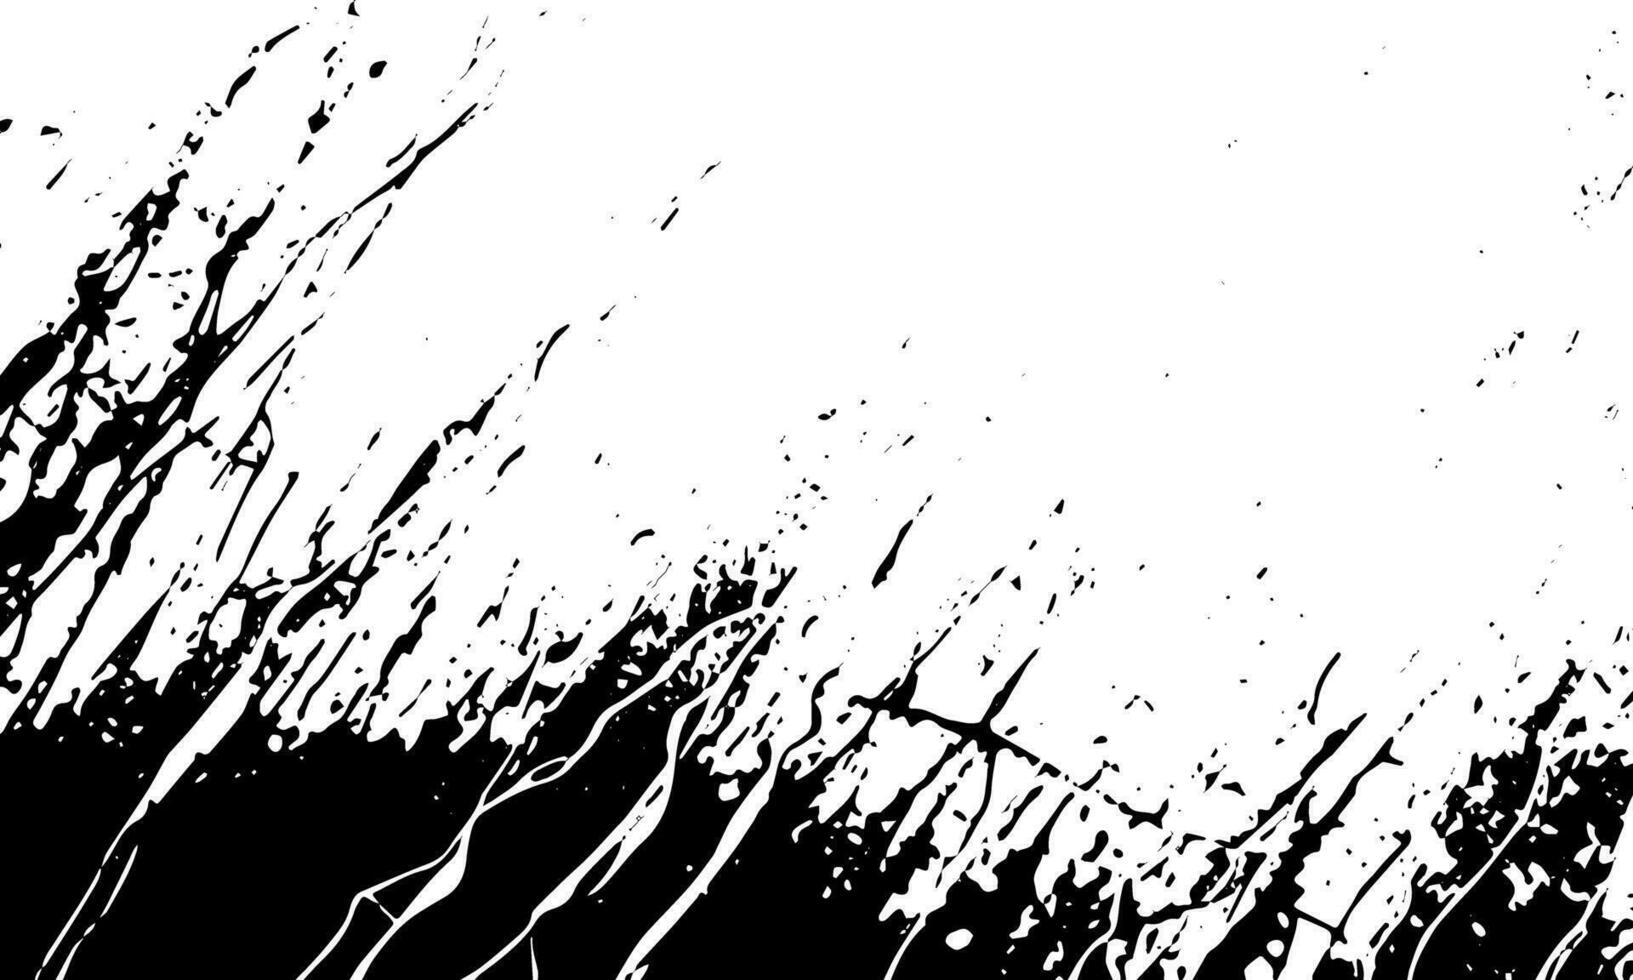 zwart en wit grunge textuur achtergrond vector